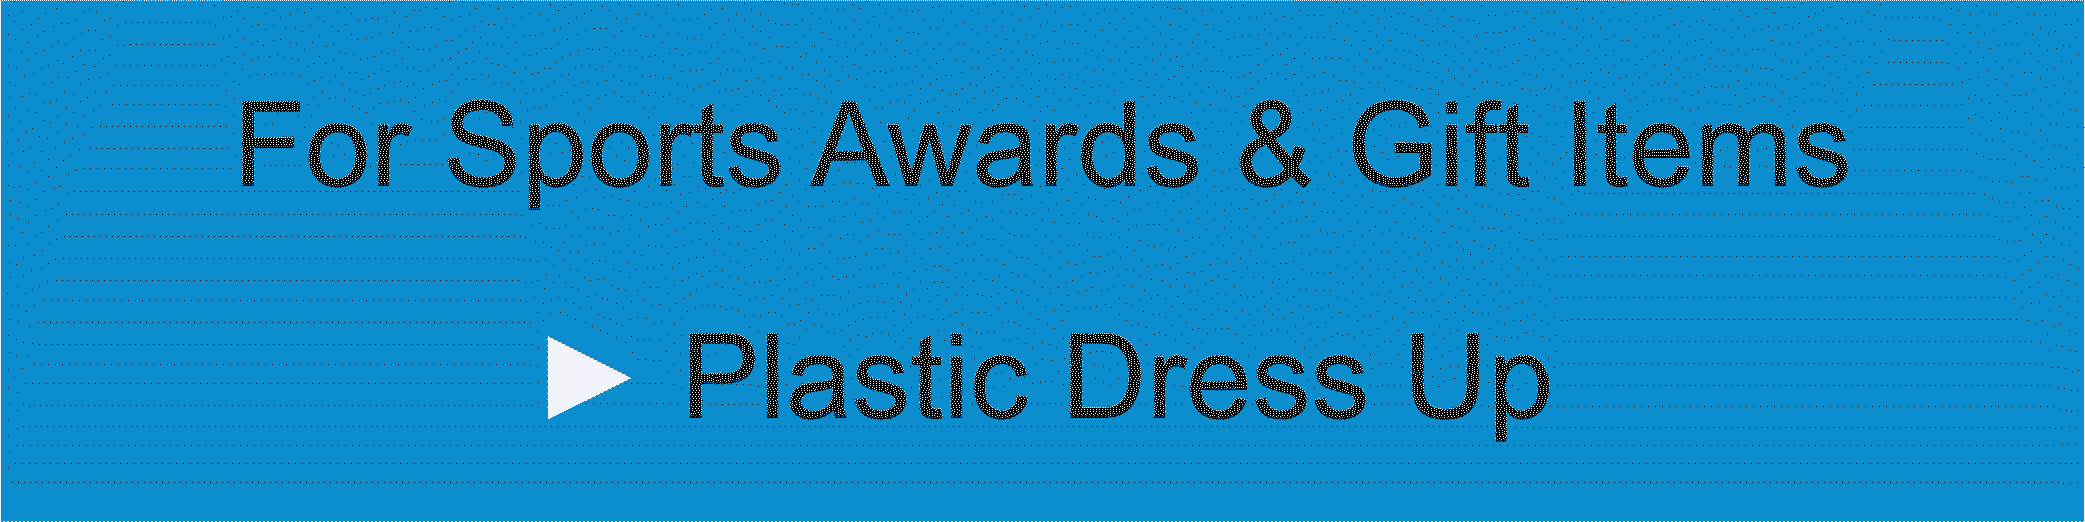 Plastic Dress Up catalog